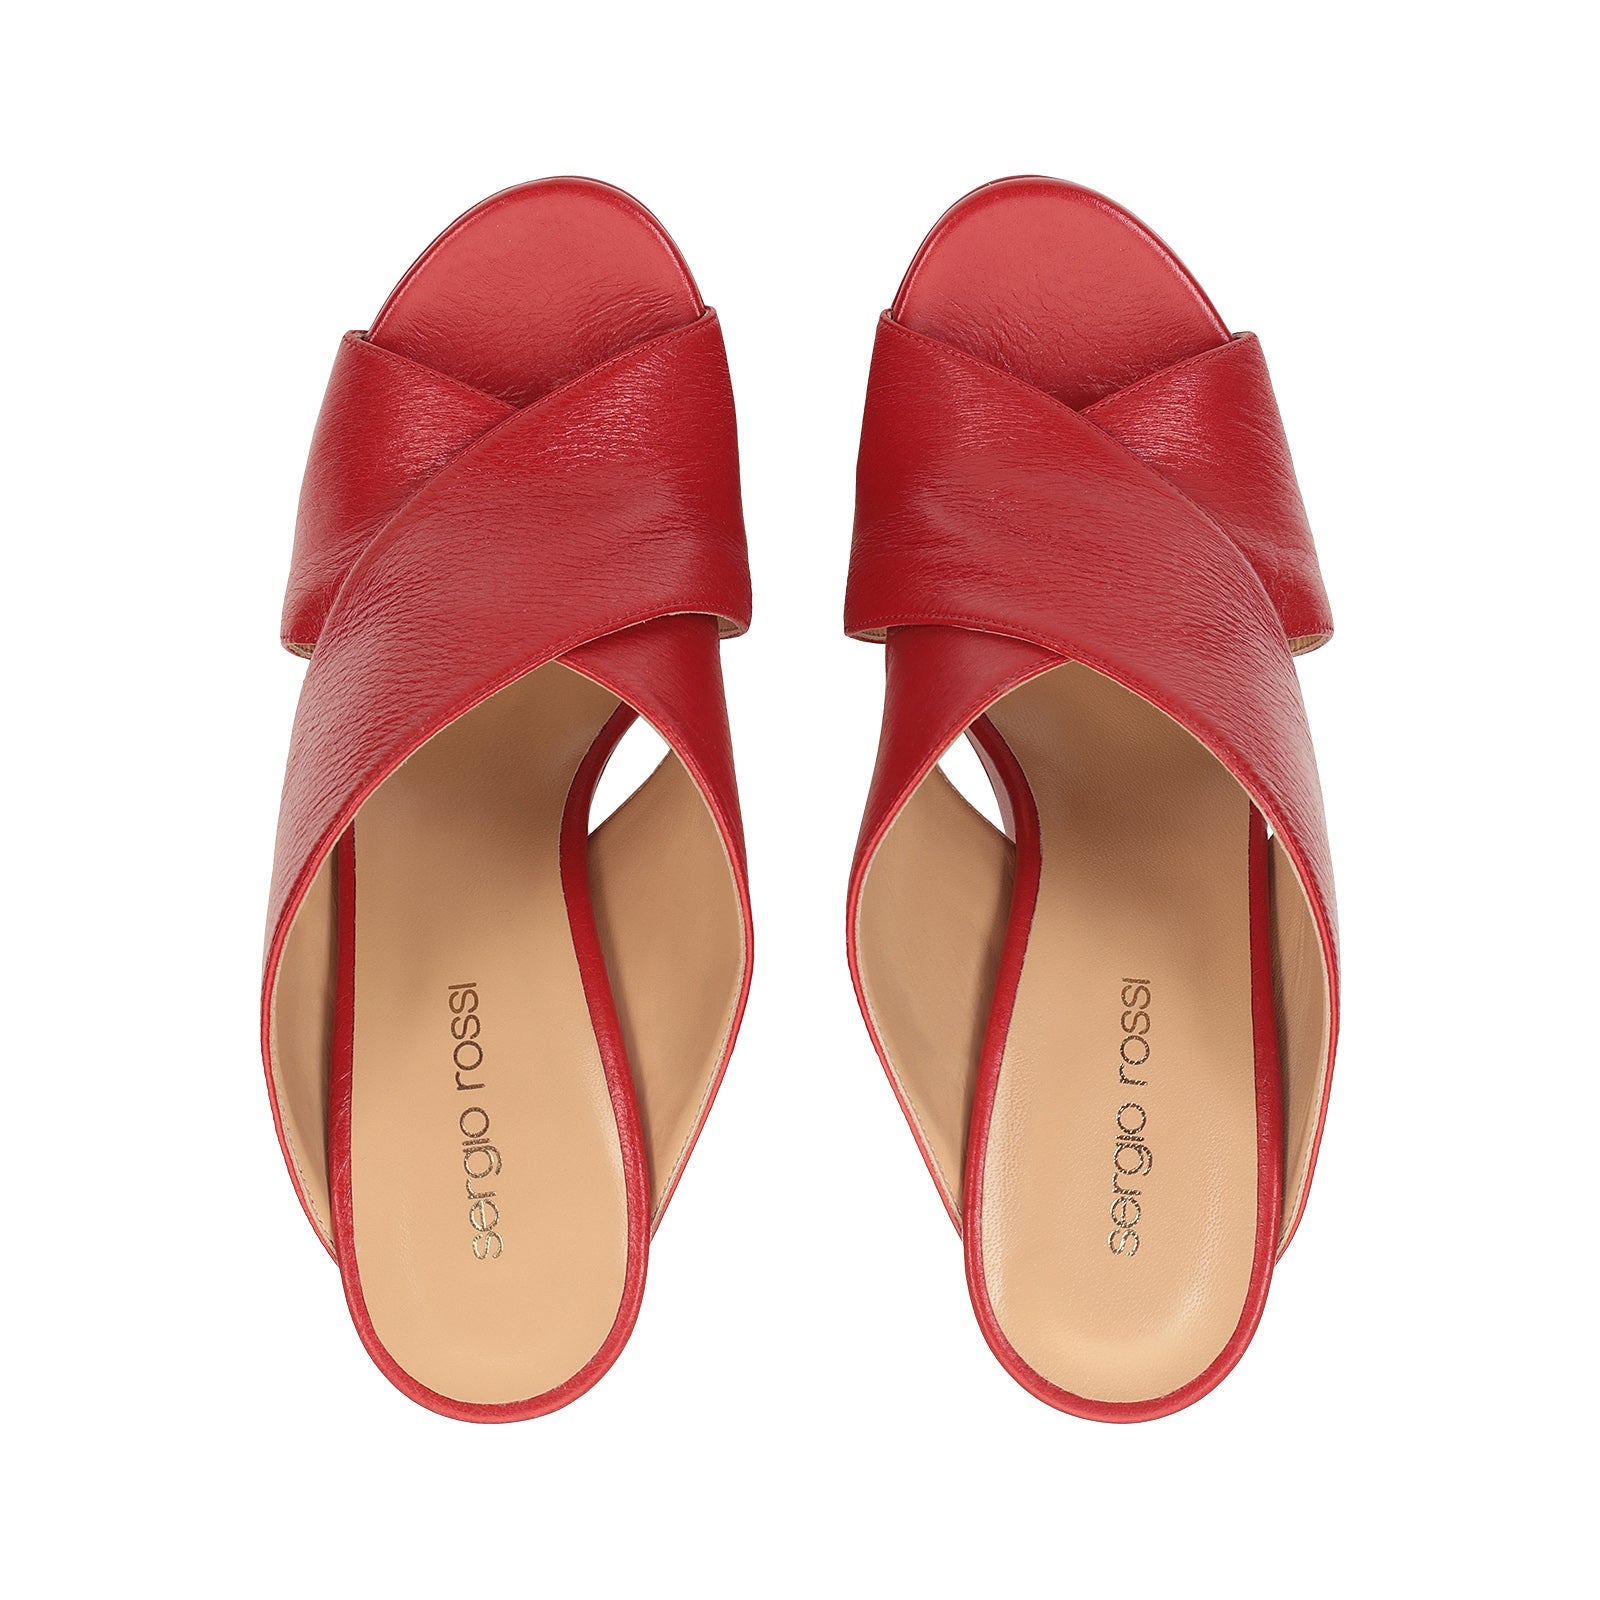 Alma wedge sandals 75 - Rosso Flamenco